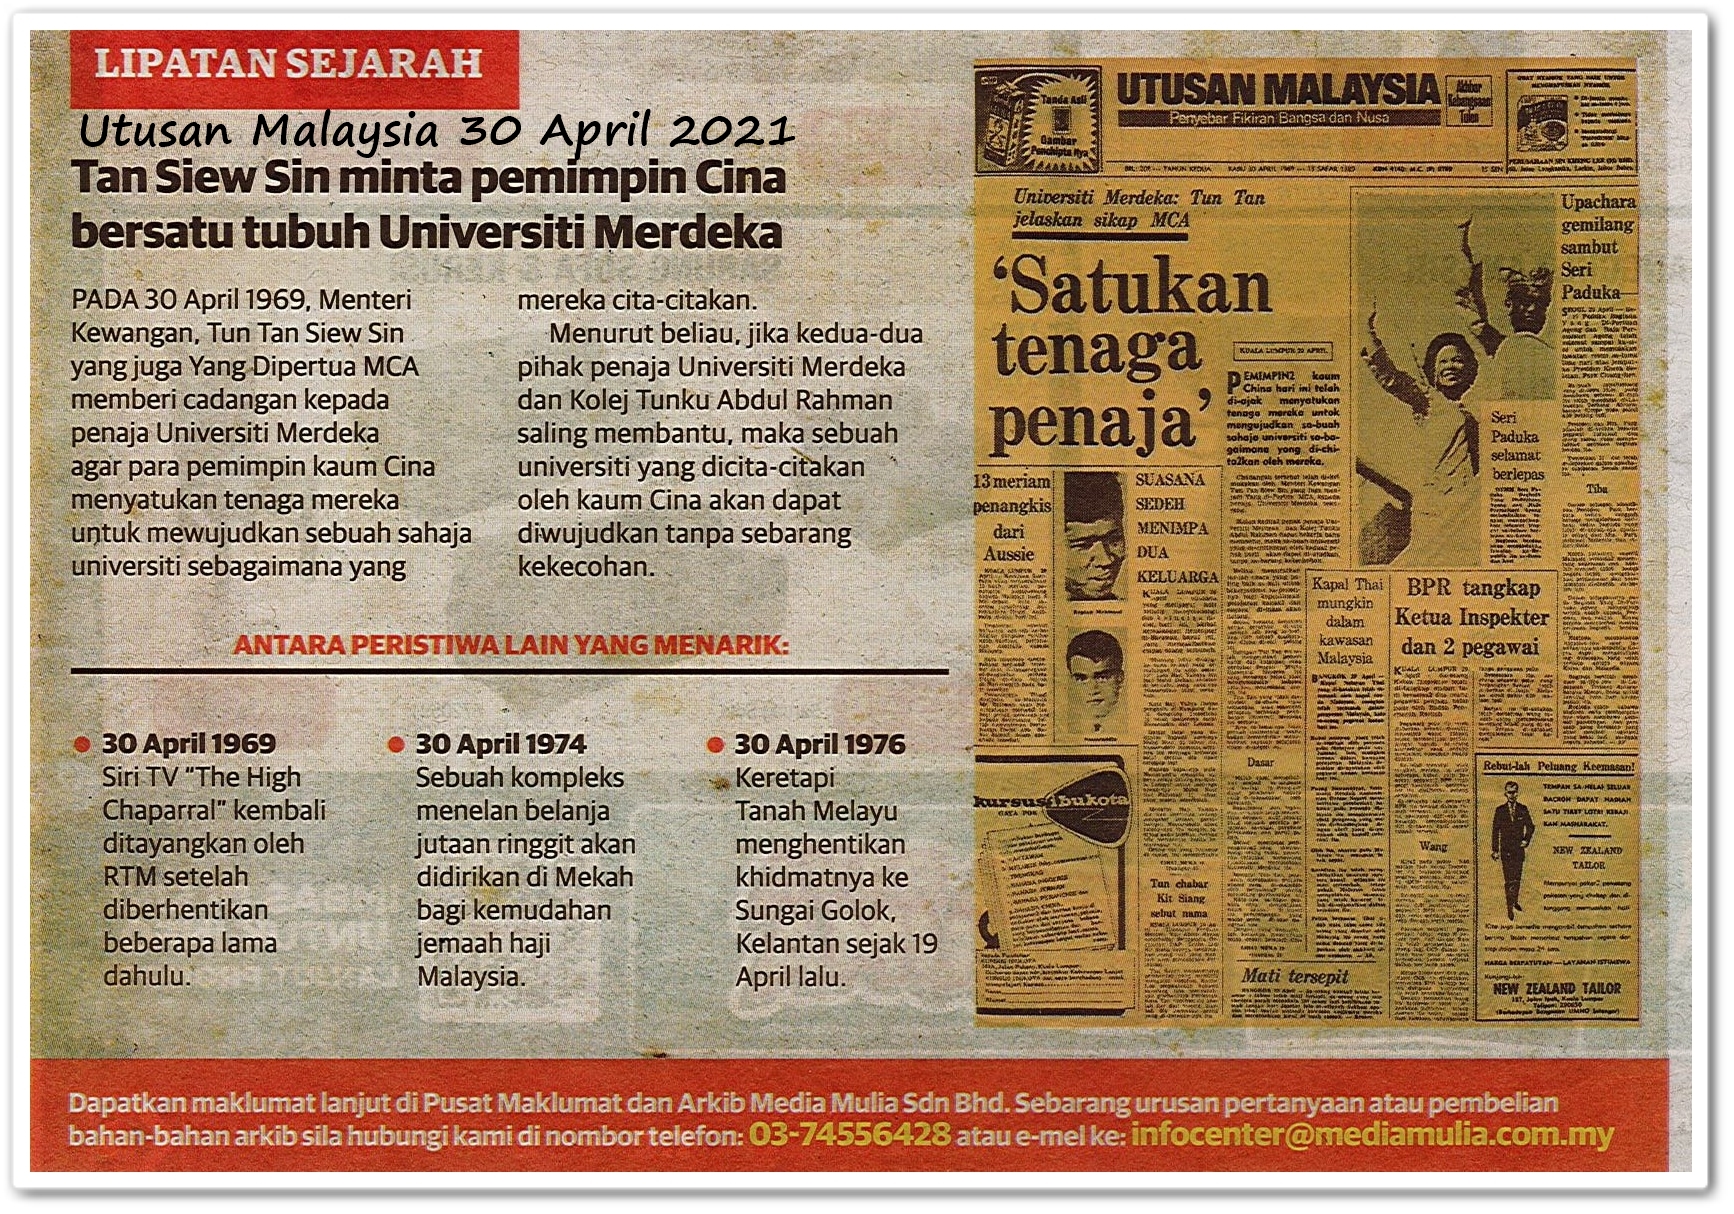 Lipatan sejarah 30 April - Keratan akhbar Utusan Malaysia 30 April 2021